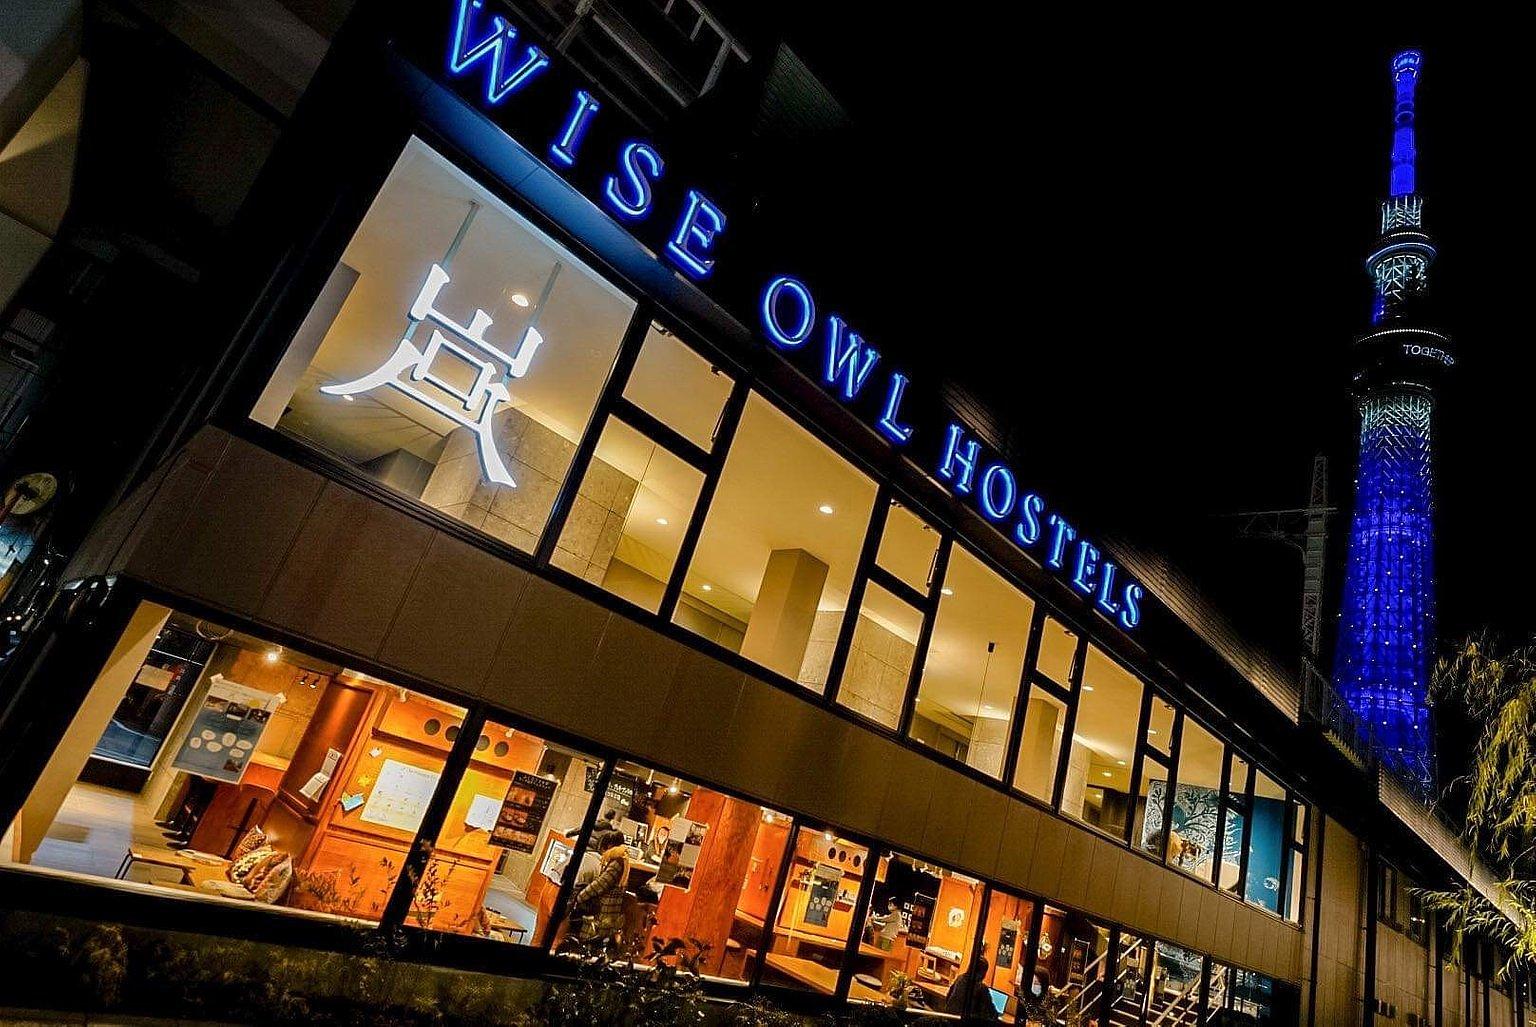 WISE OWL HOSTELS RIVER TOKYO